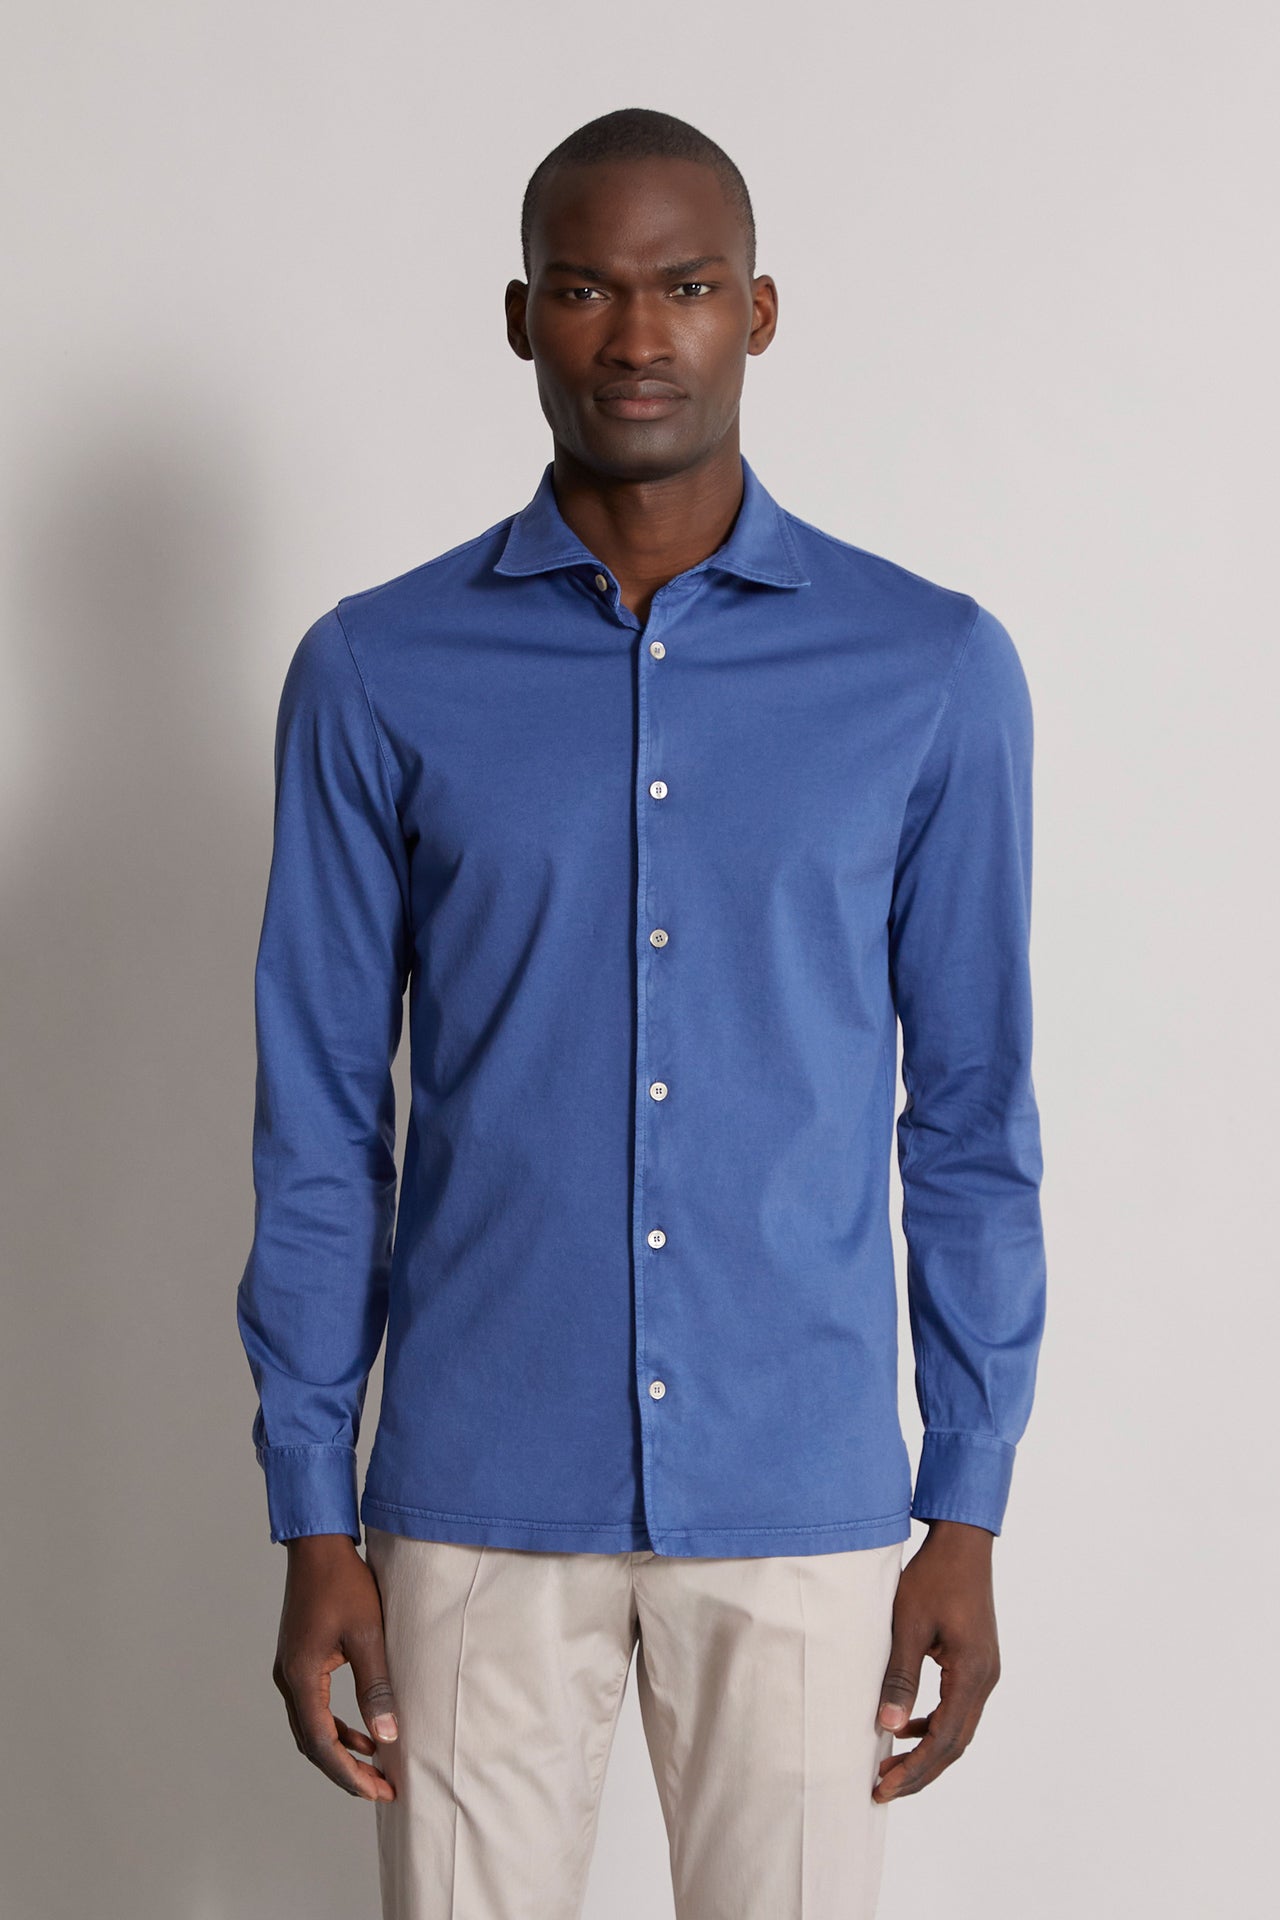 Organic Cotton Shirt - Long Sleeve - Dark Blue - Front View